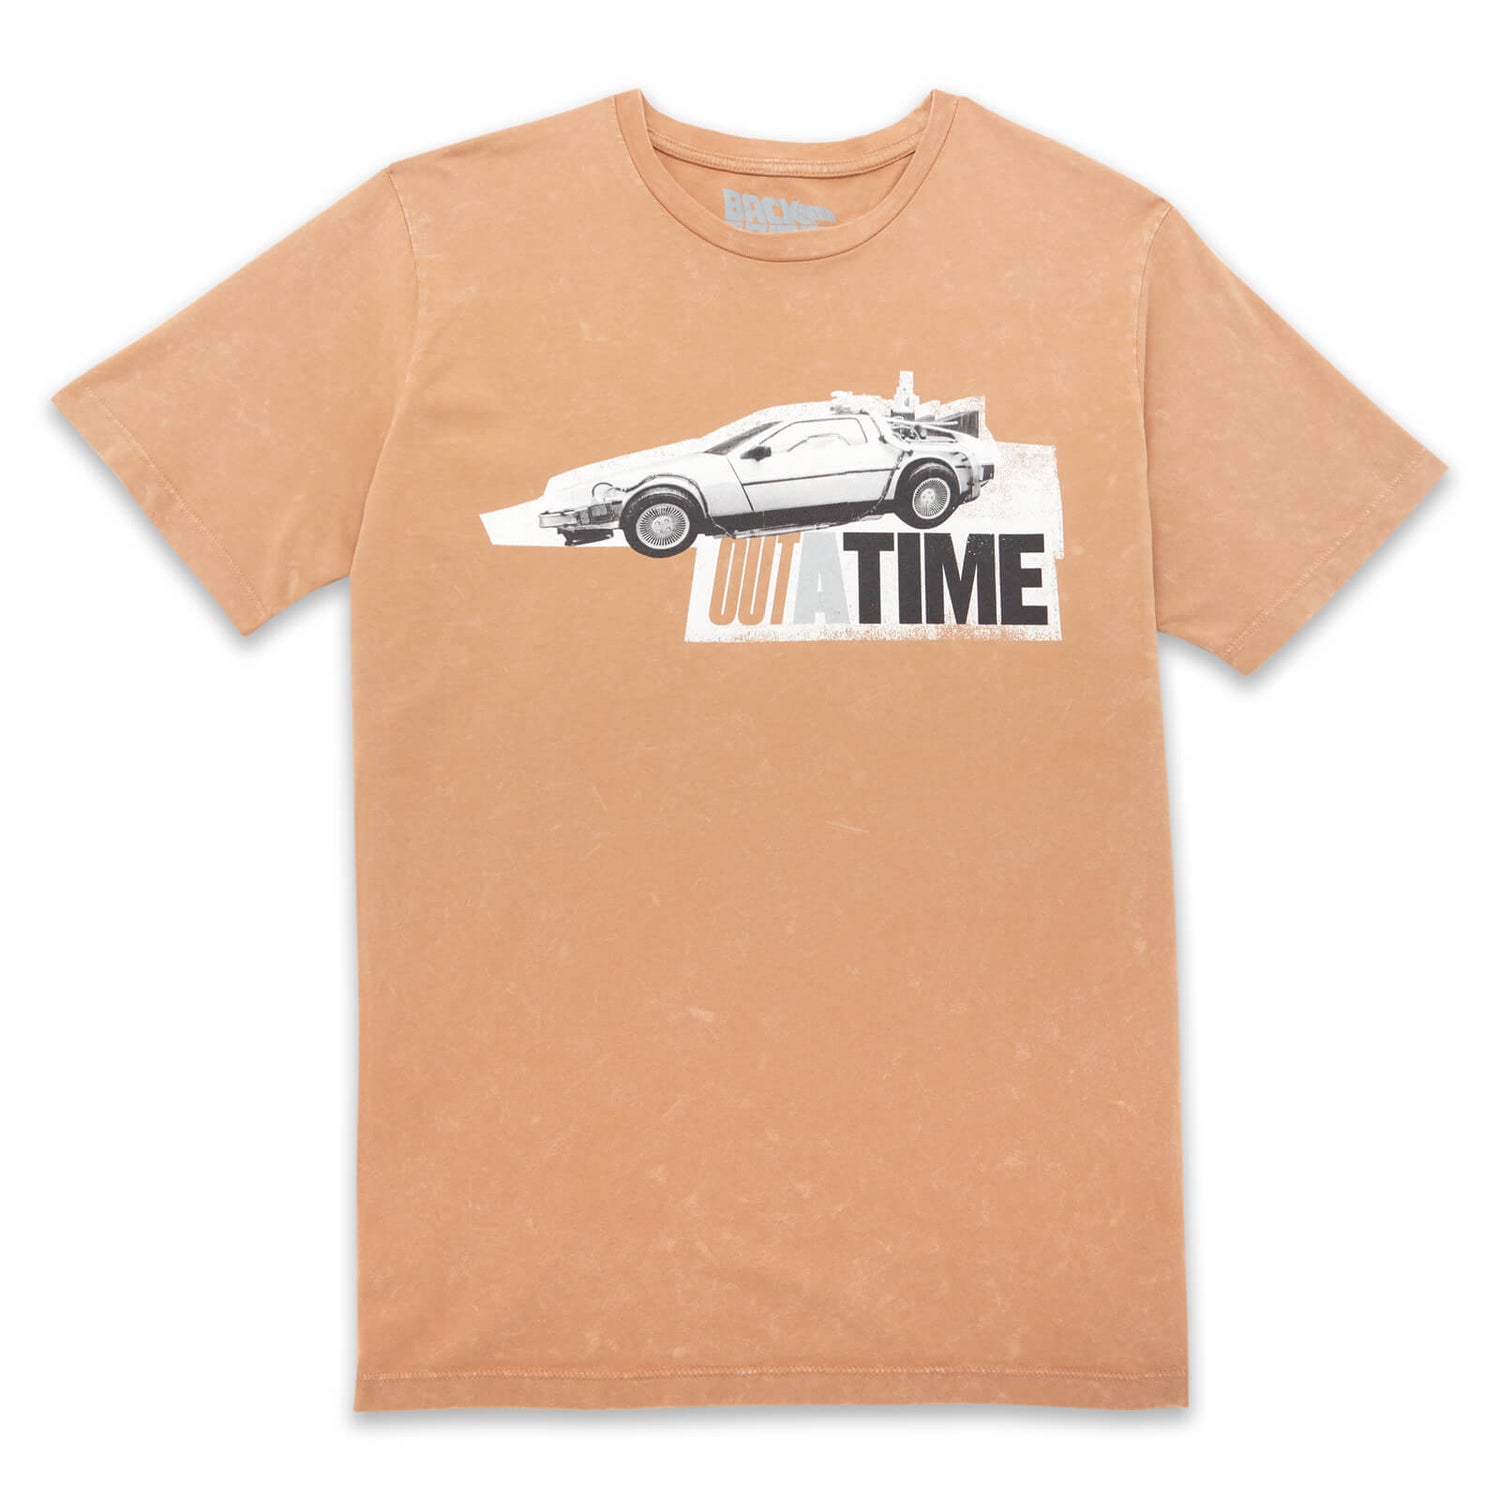 Back to the Future Outatime Unisex T-Shirt - Tan Acid Wash